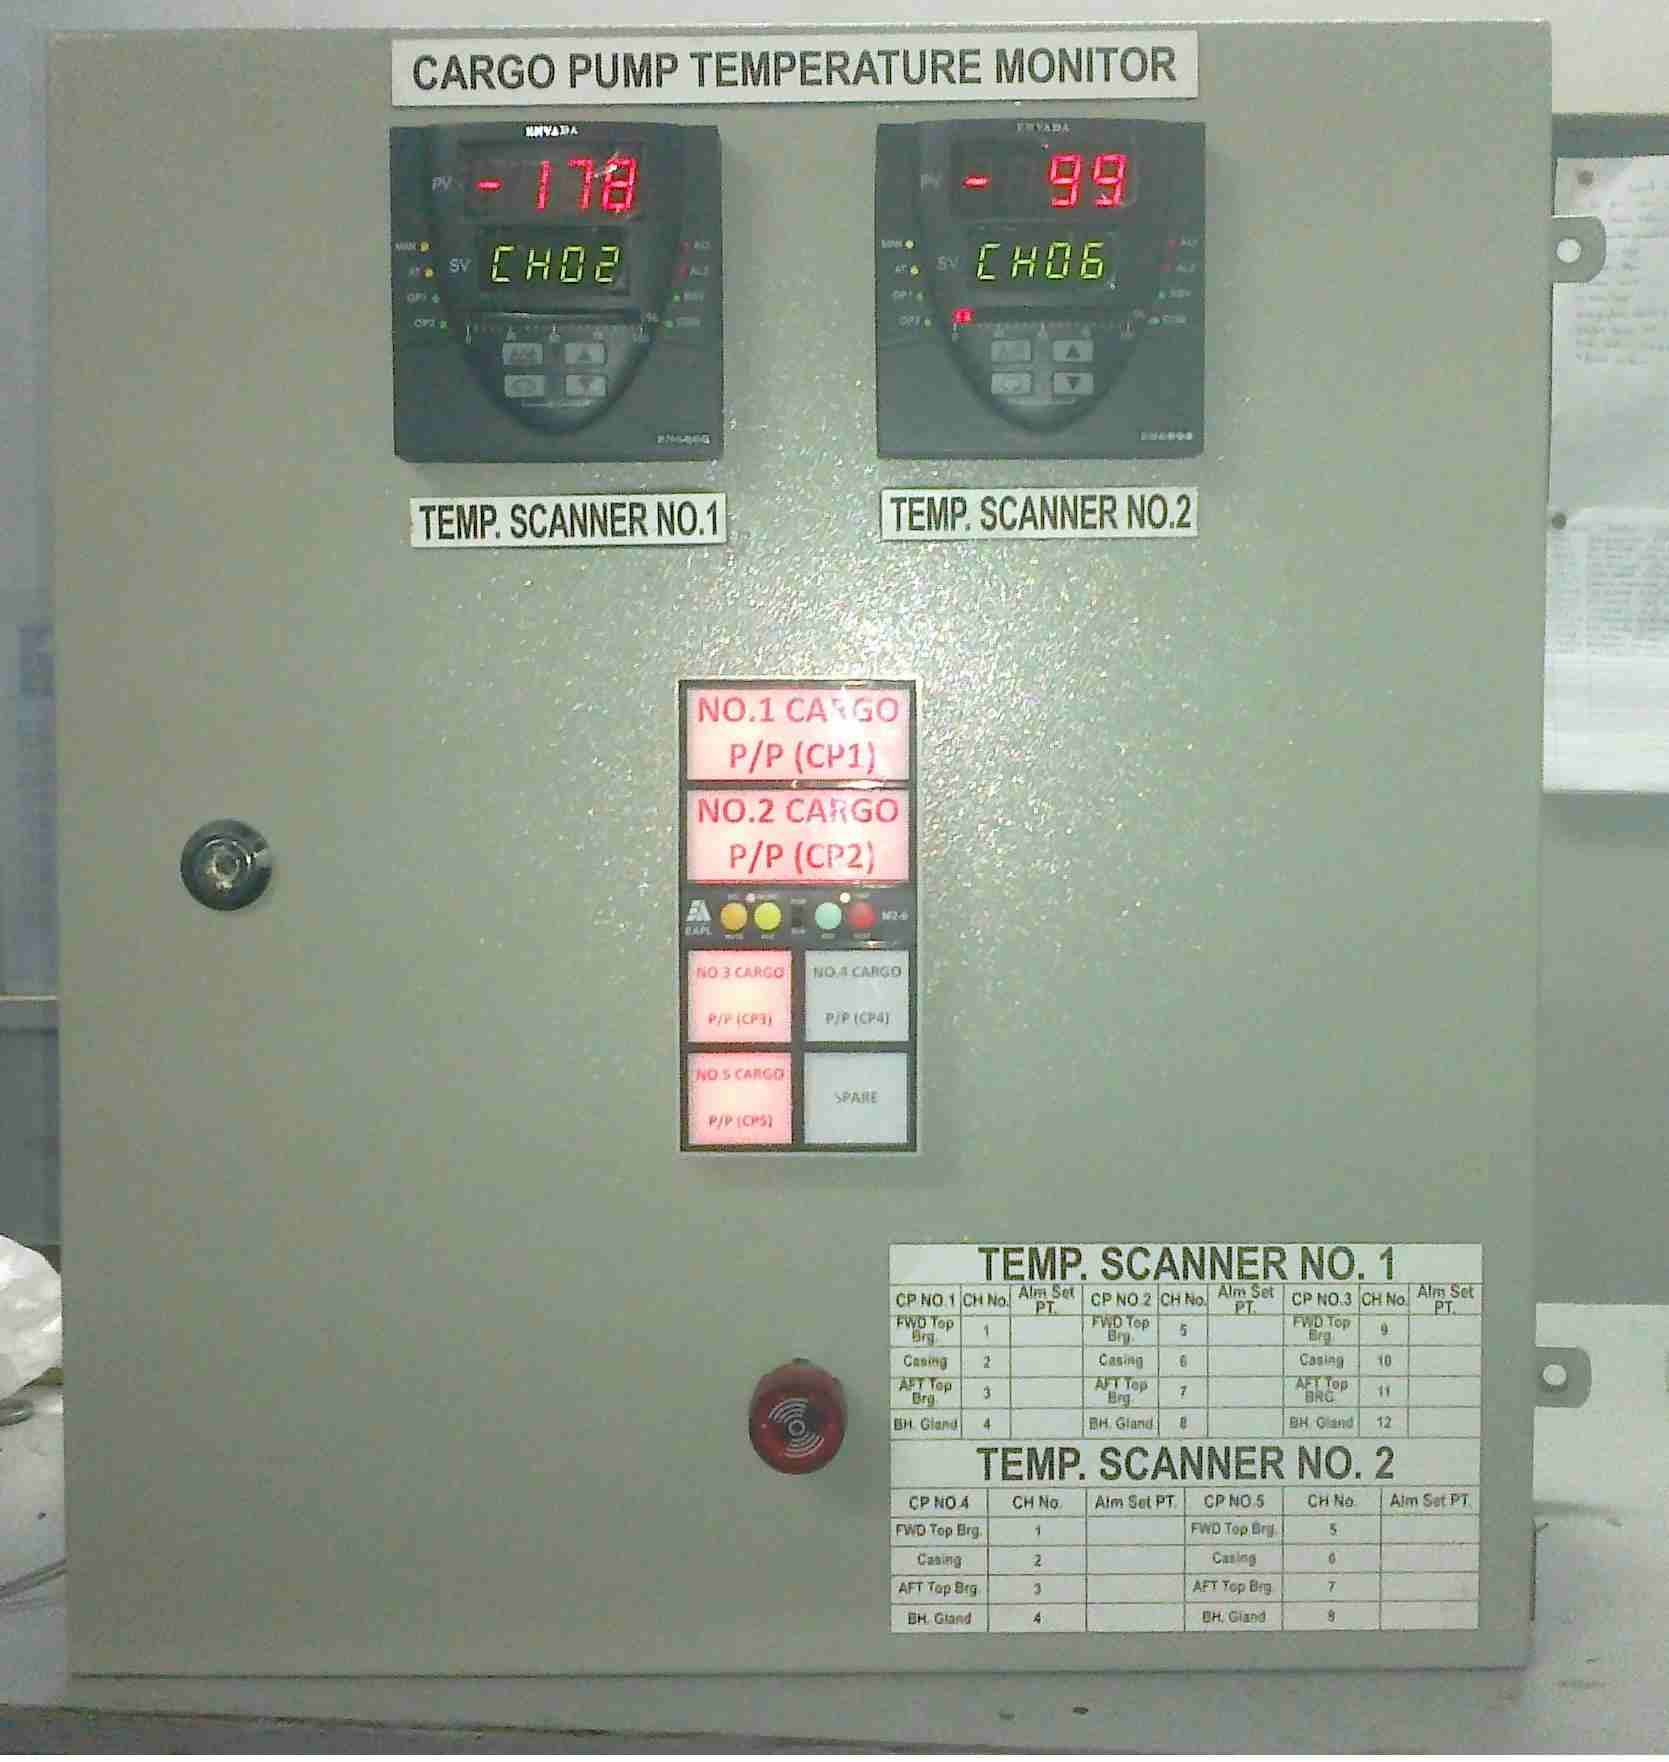 control-panel-1